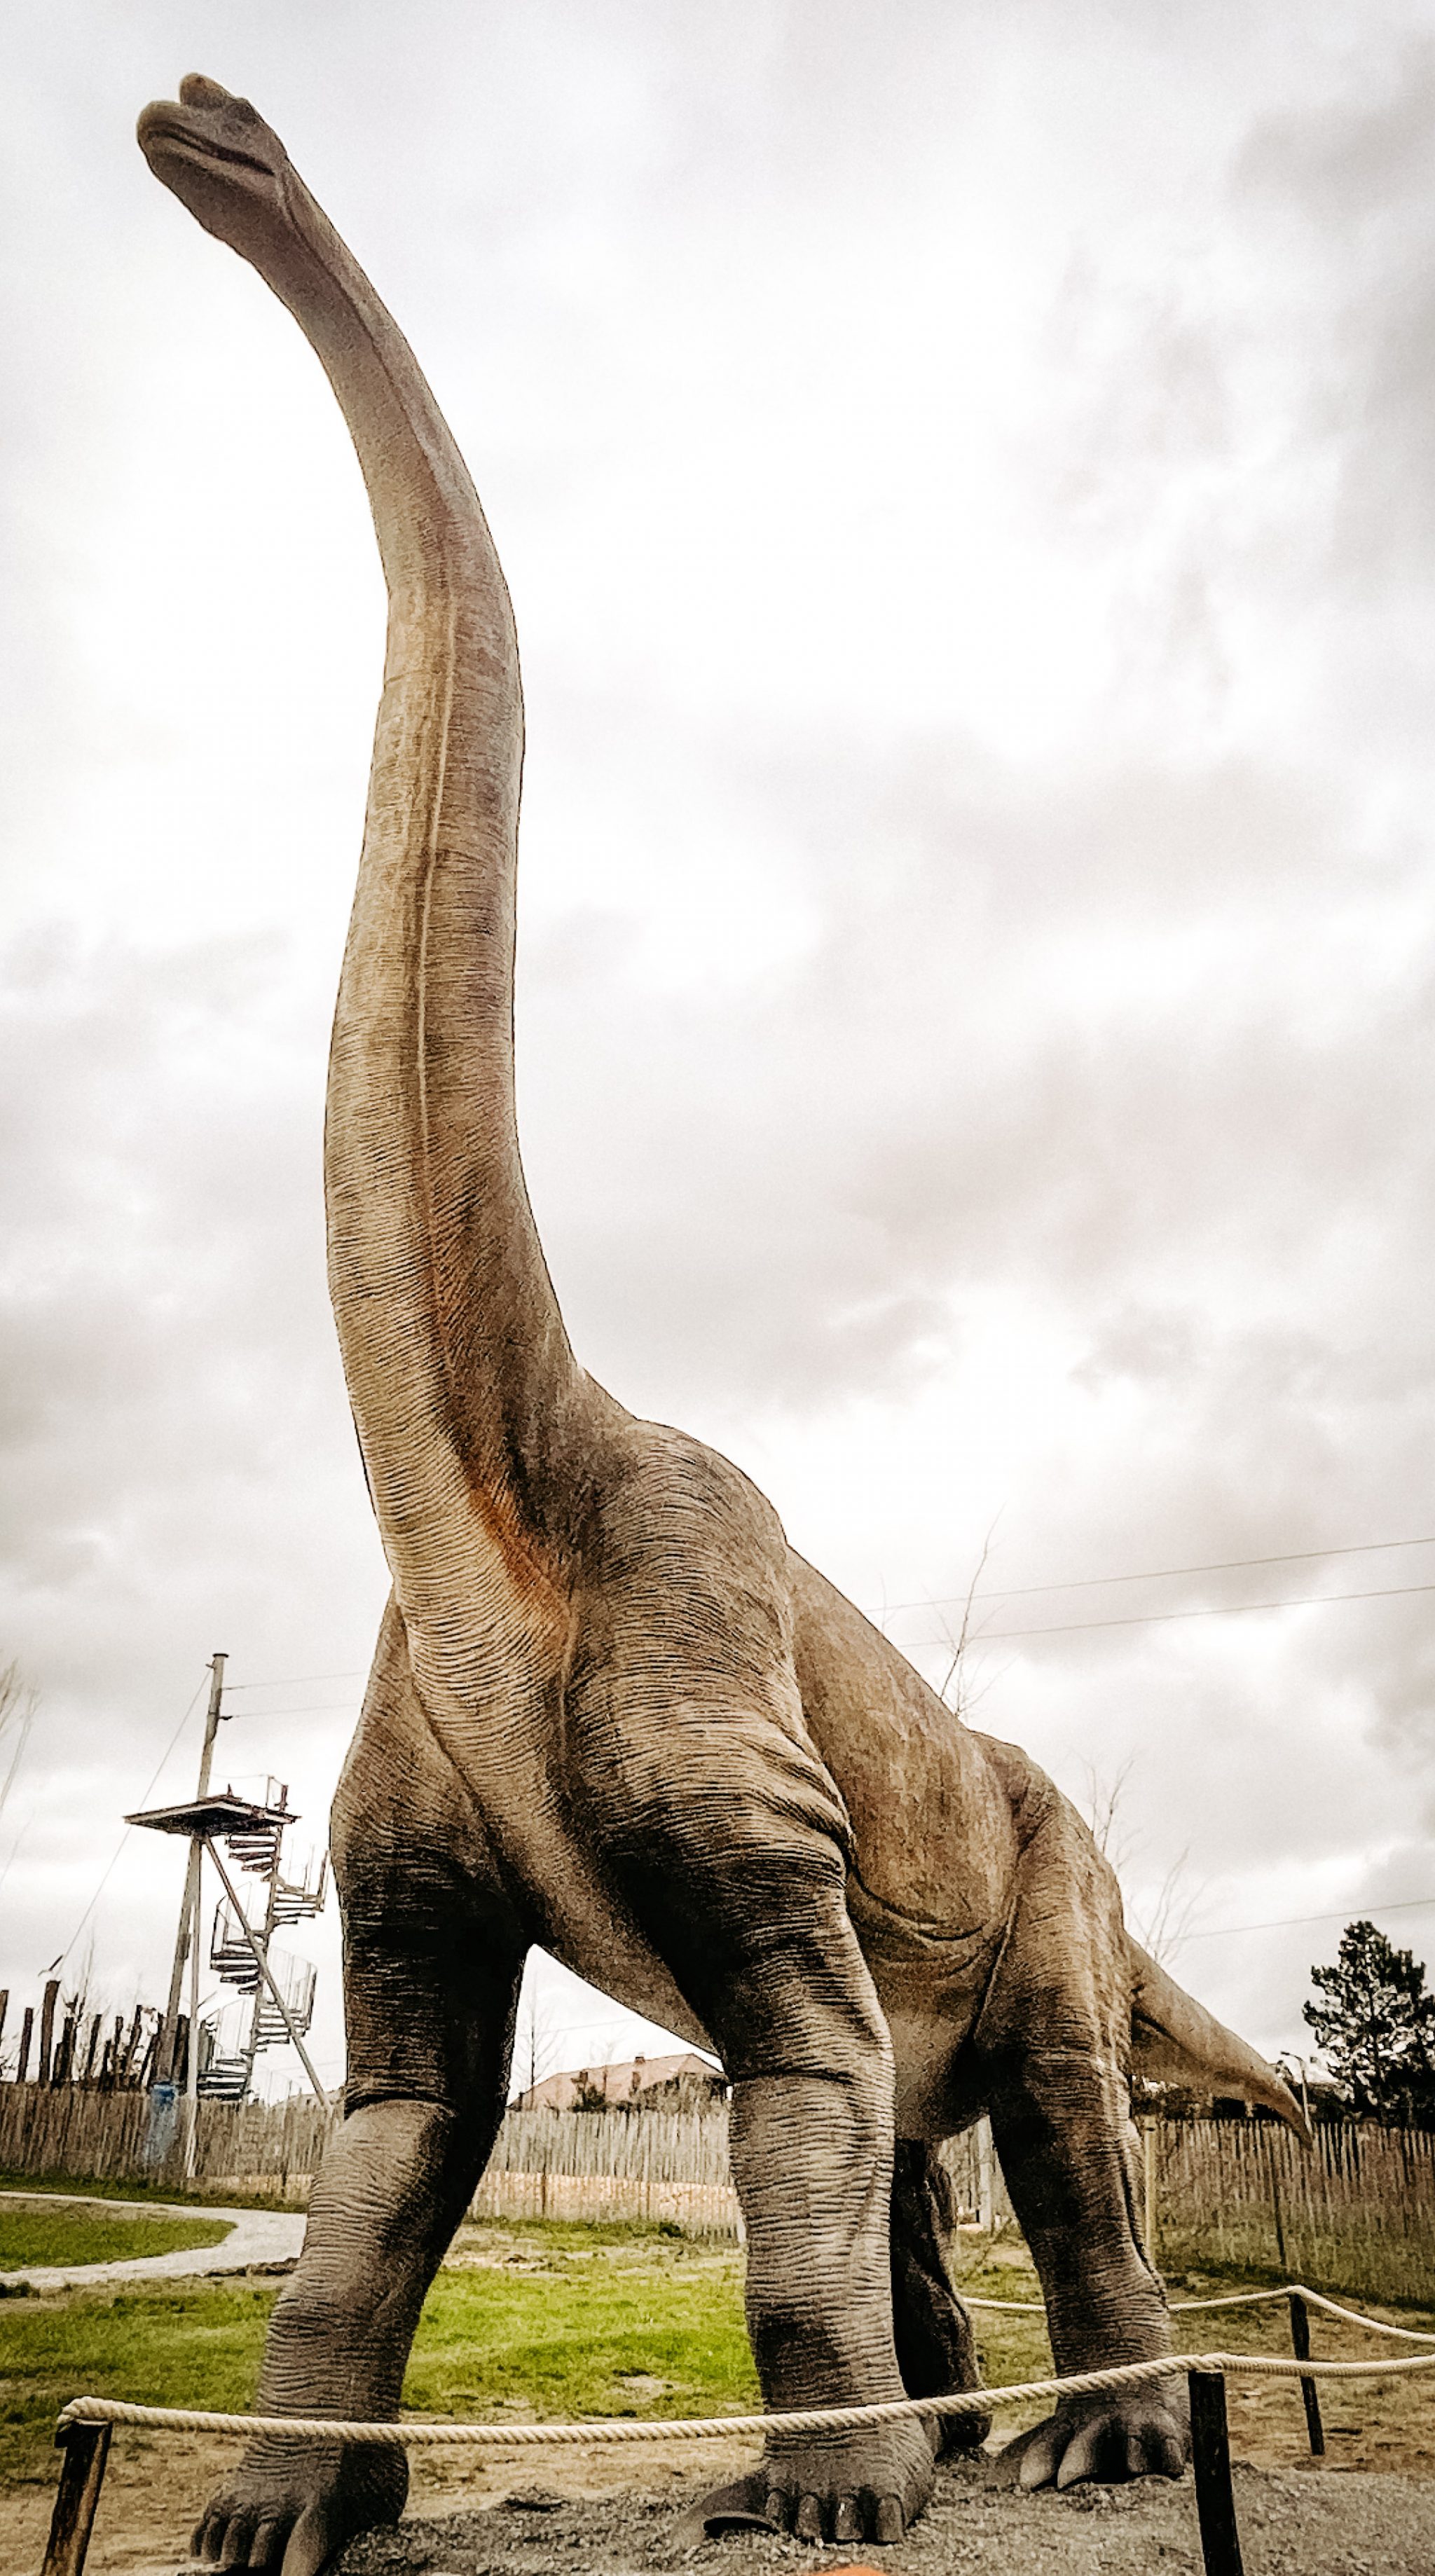 Brachiosaurus(1)